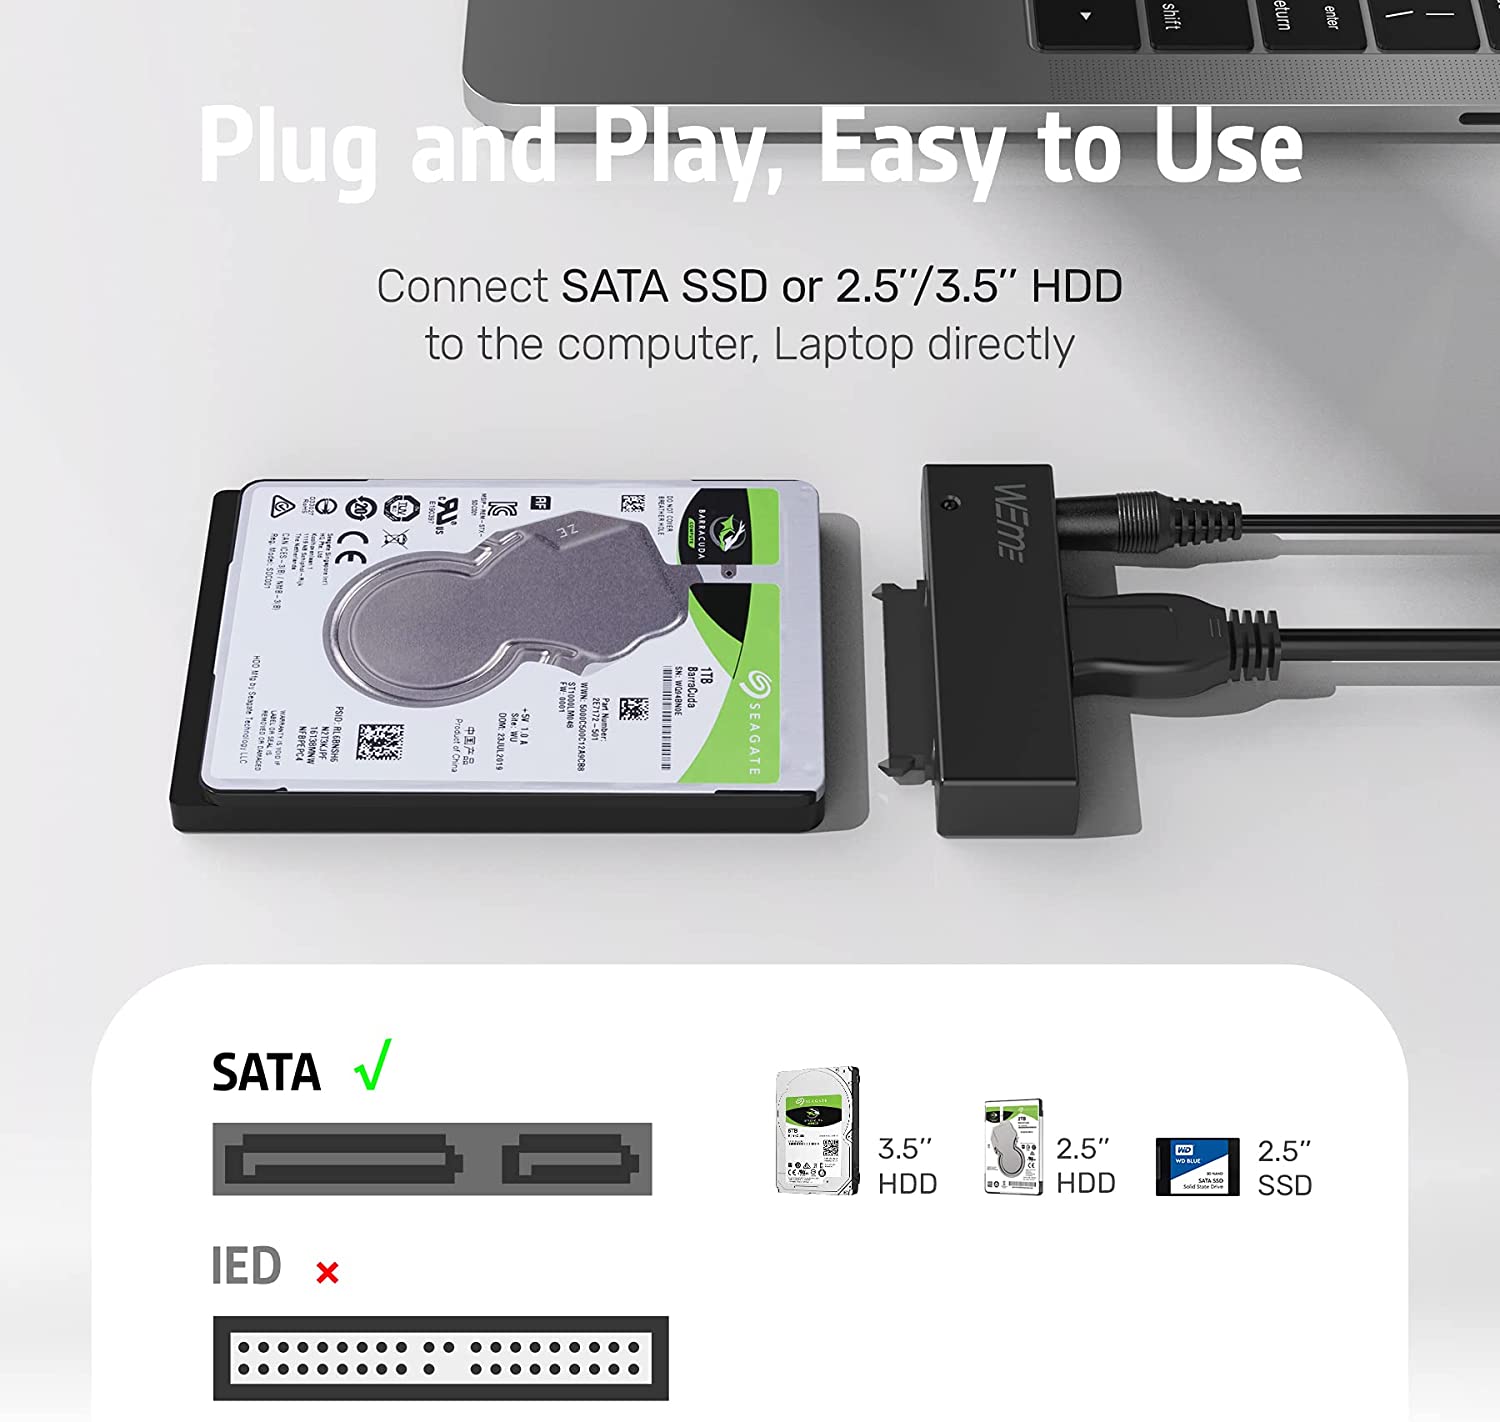 Adapter, USB C - 2.5/3.5' SATA, USB 3.1 - Drive Adapters and Drive  Converters, Hard Drive Accessories